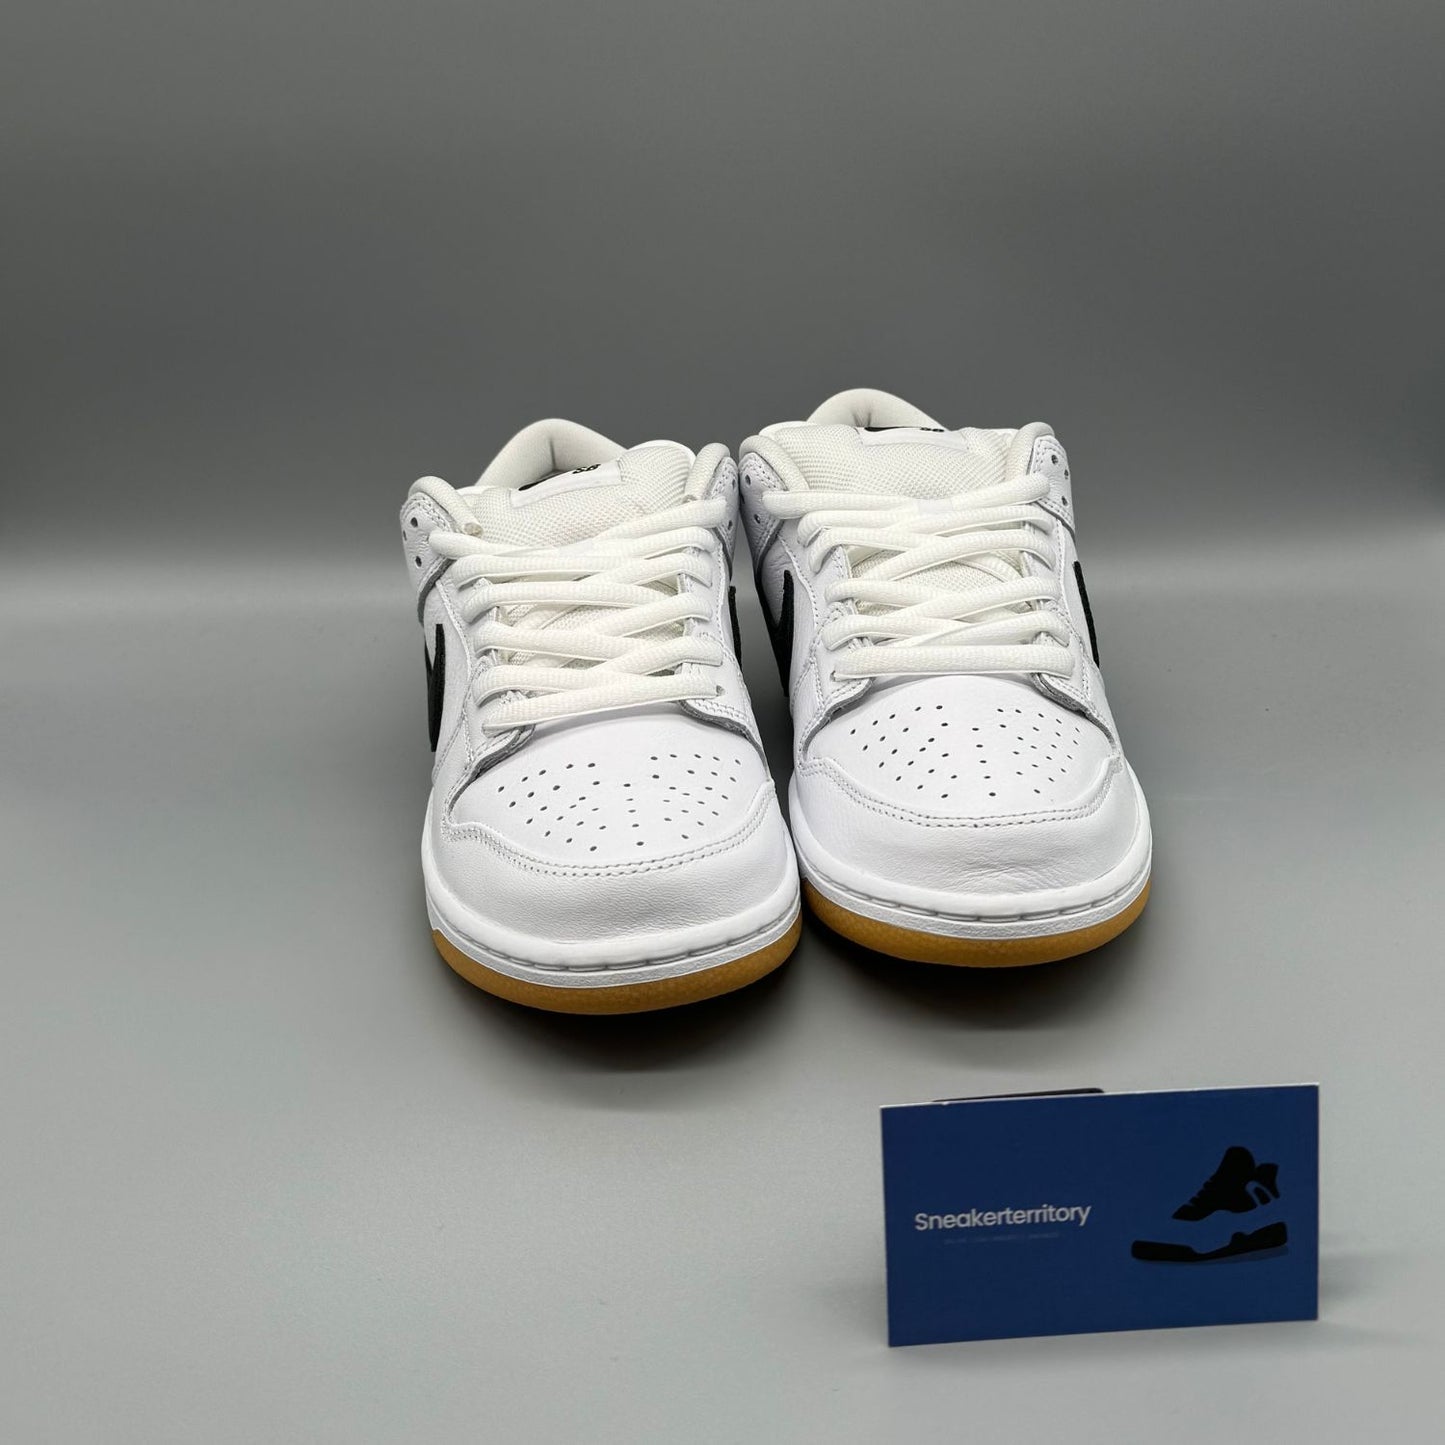 Nike SB Dunk Low Pro White Gum- Sneakerterritory; Sneaker Territory